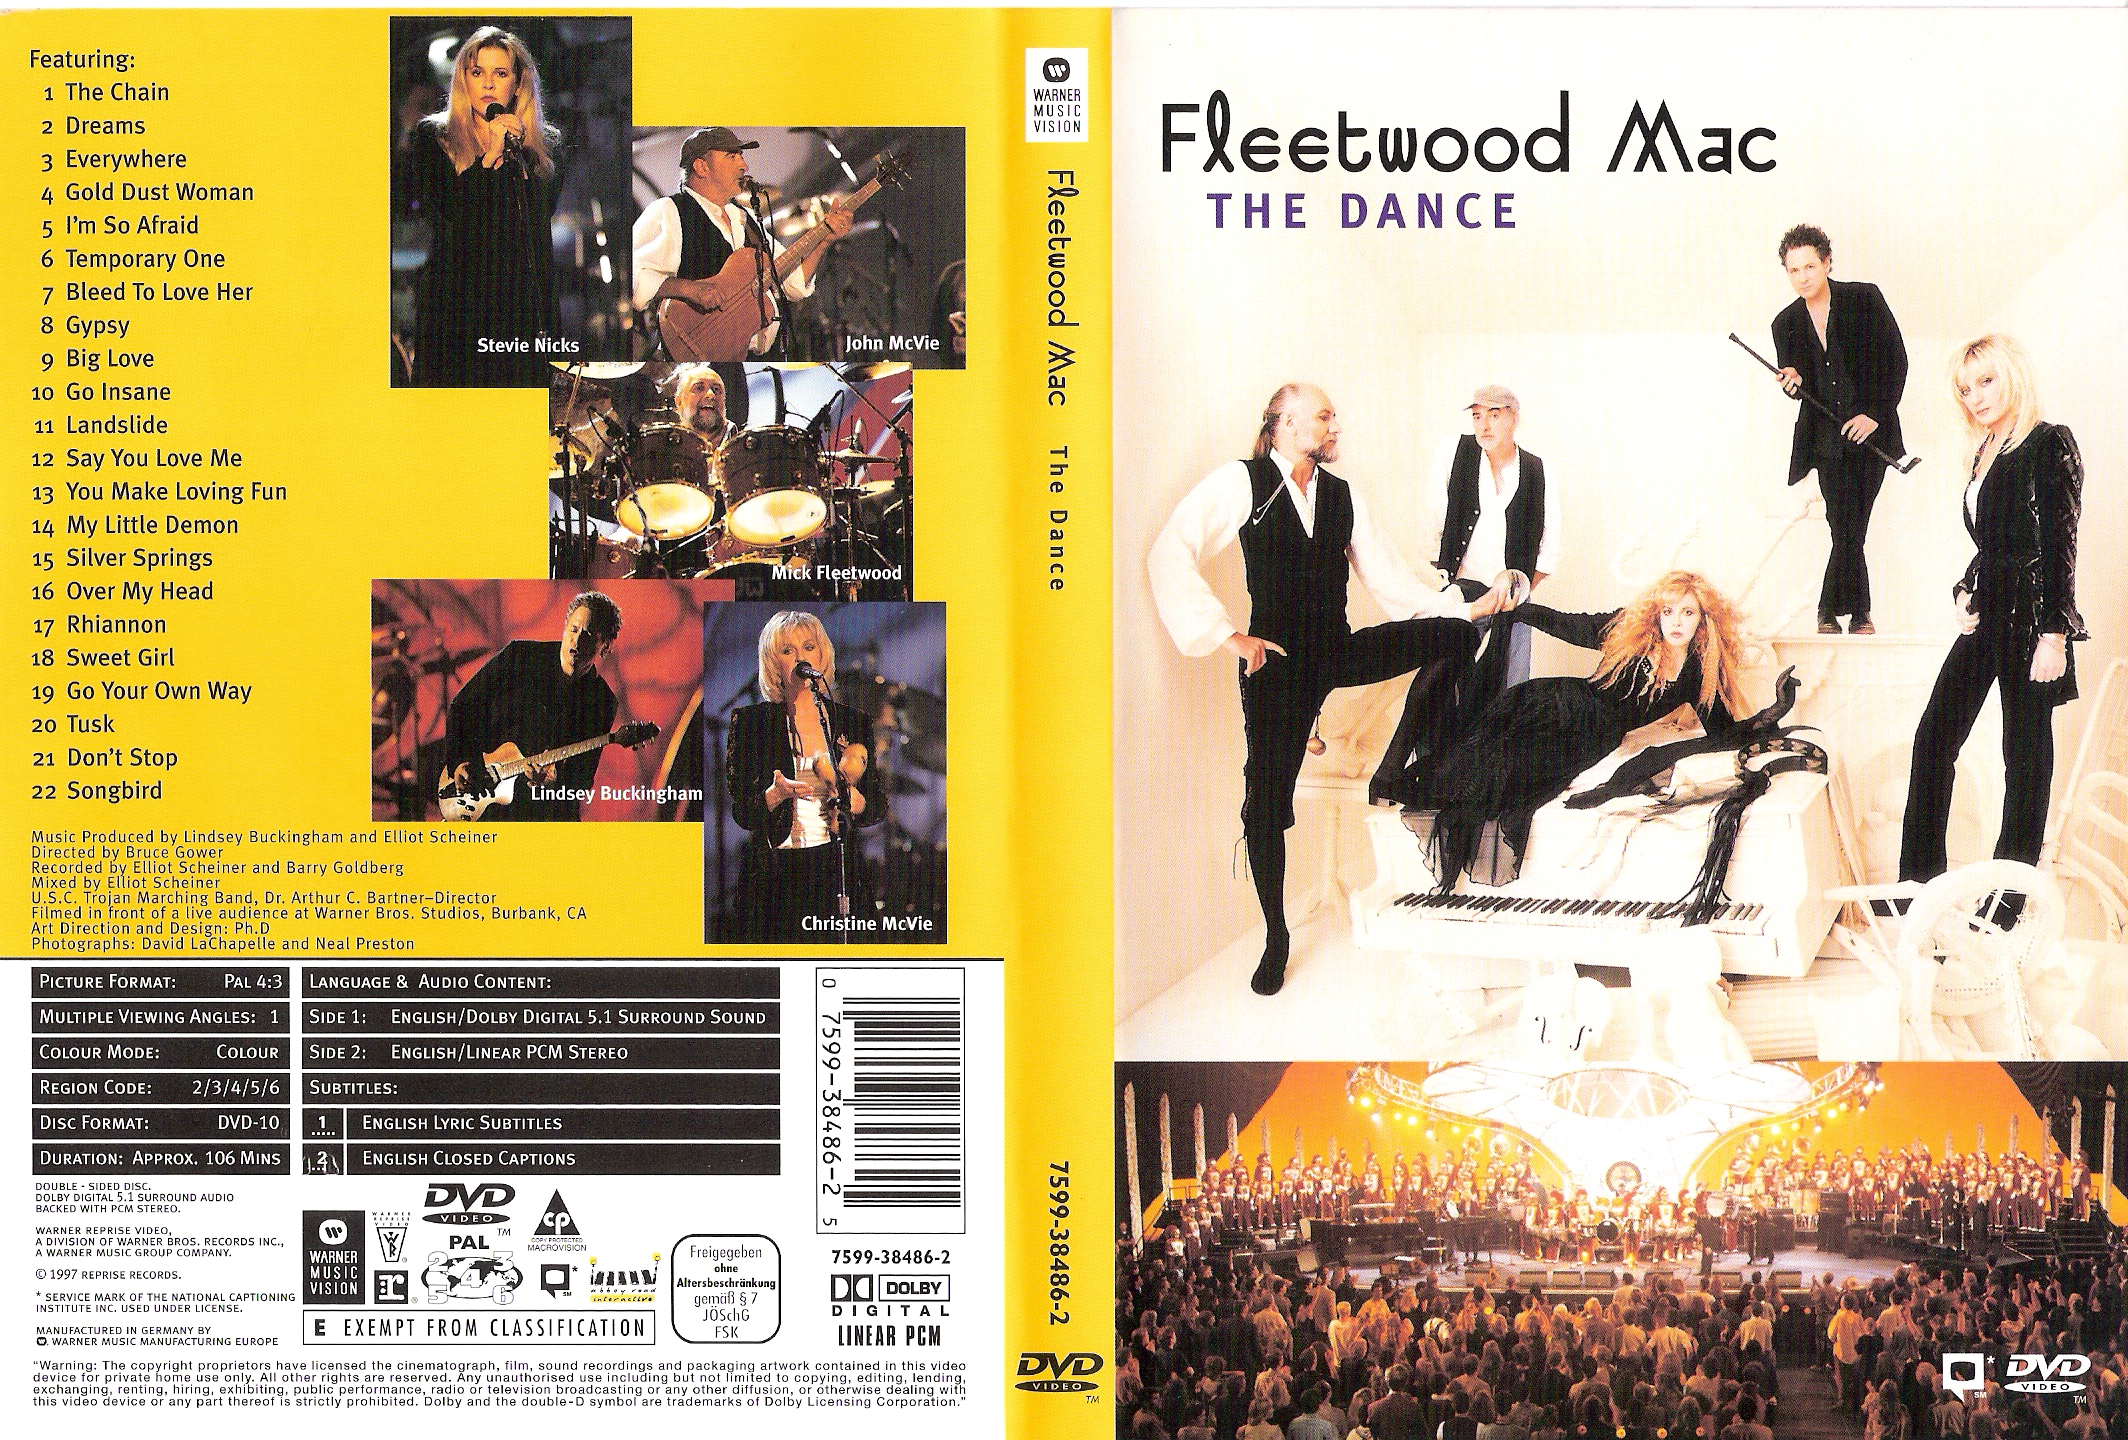 Jaquette DVD Fleetwood Mac - The dance